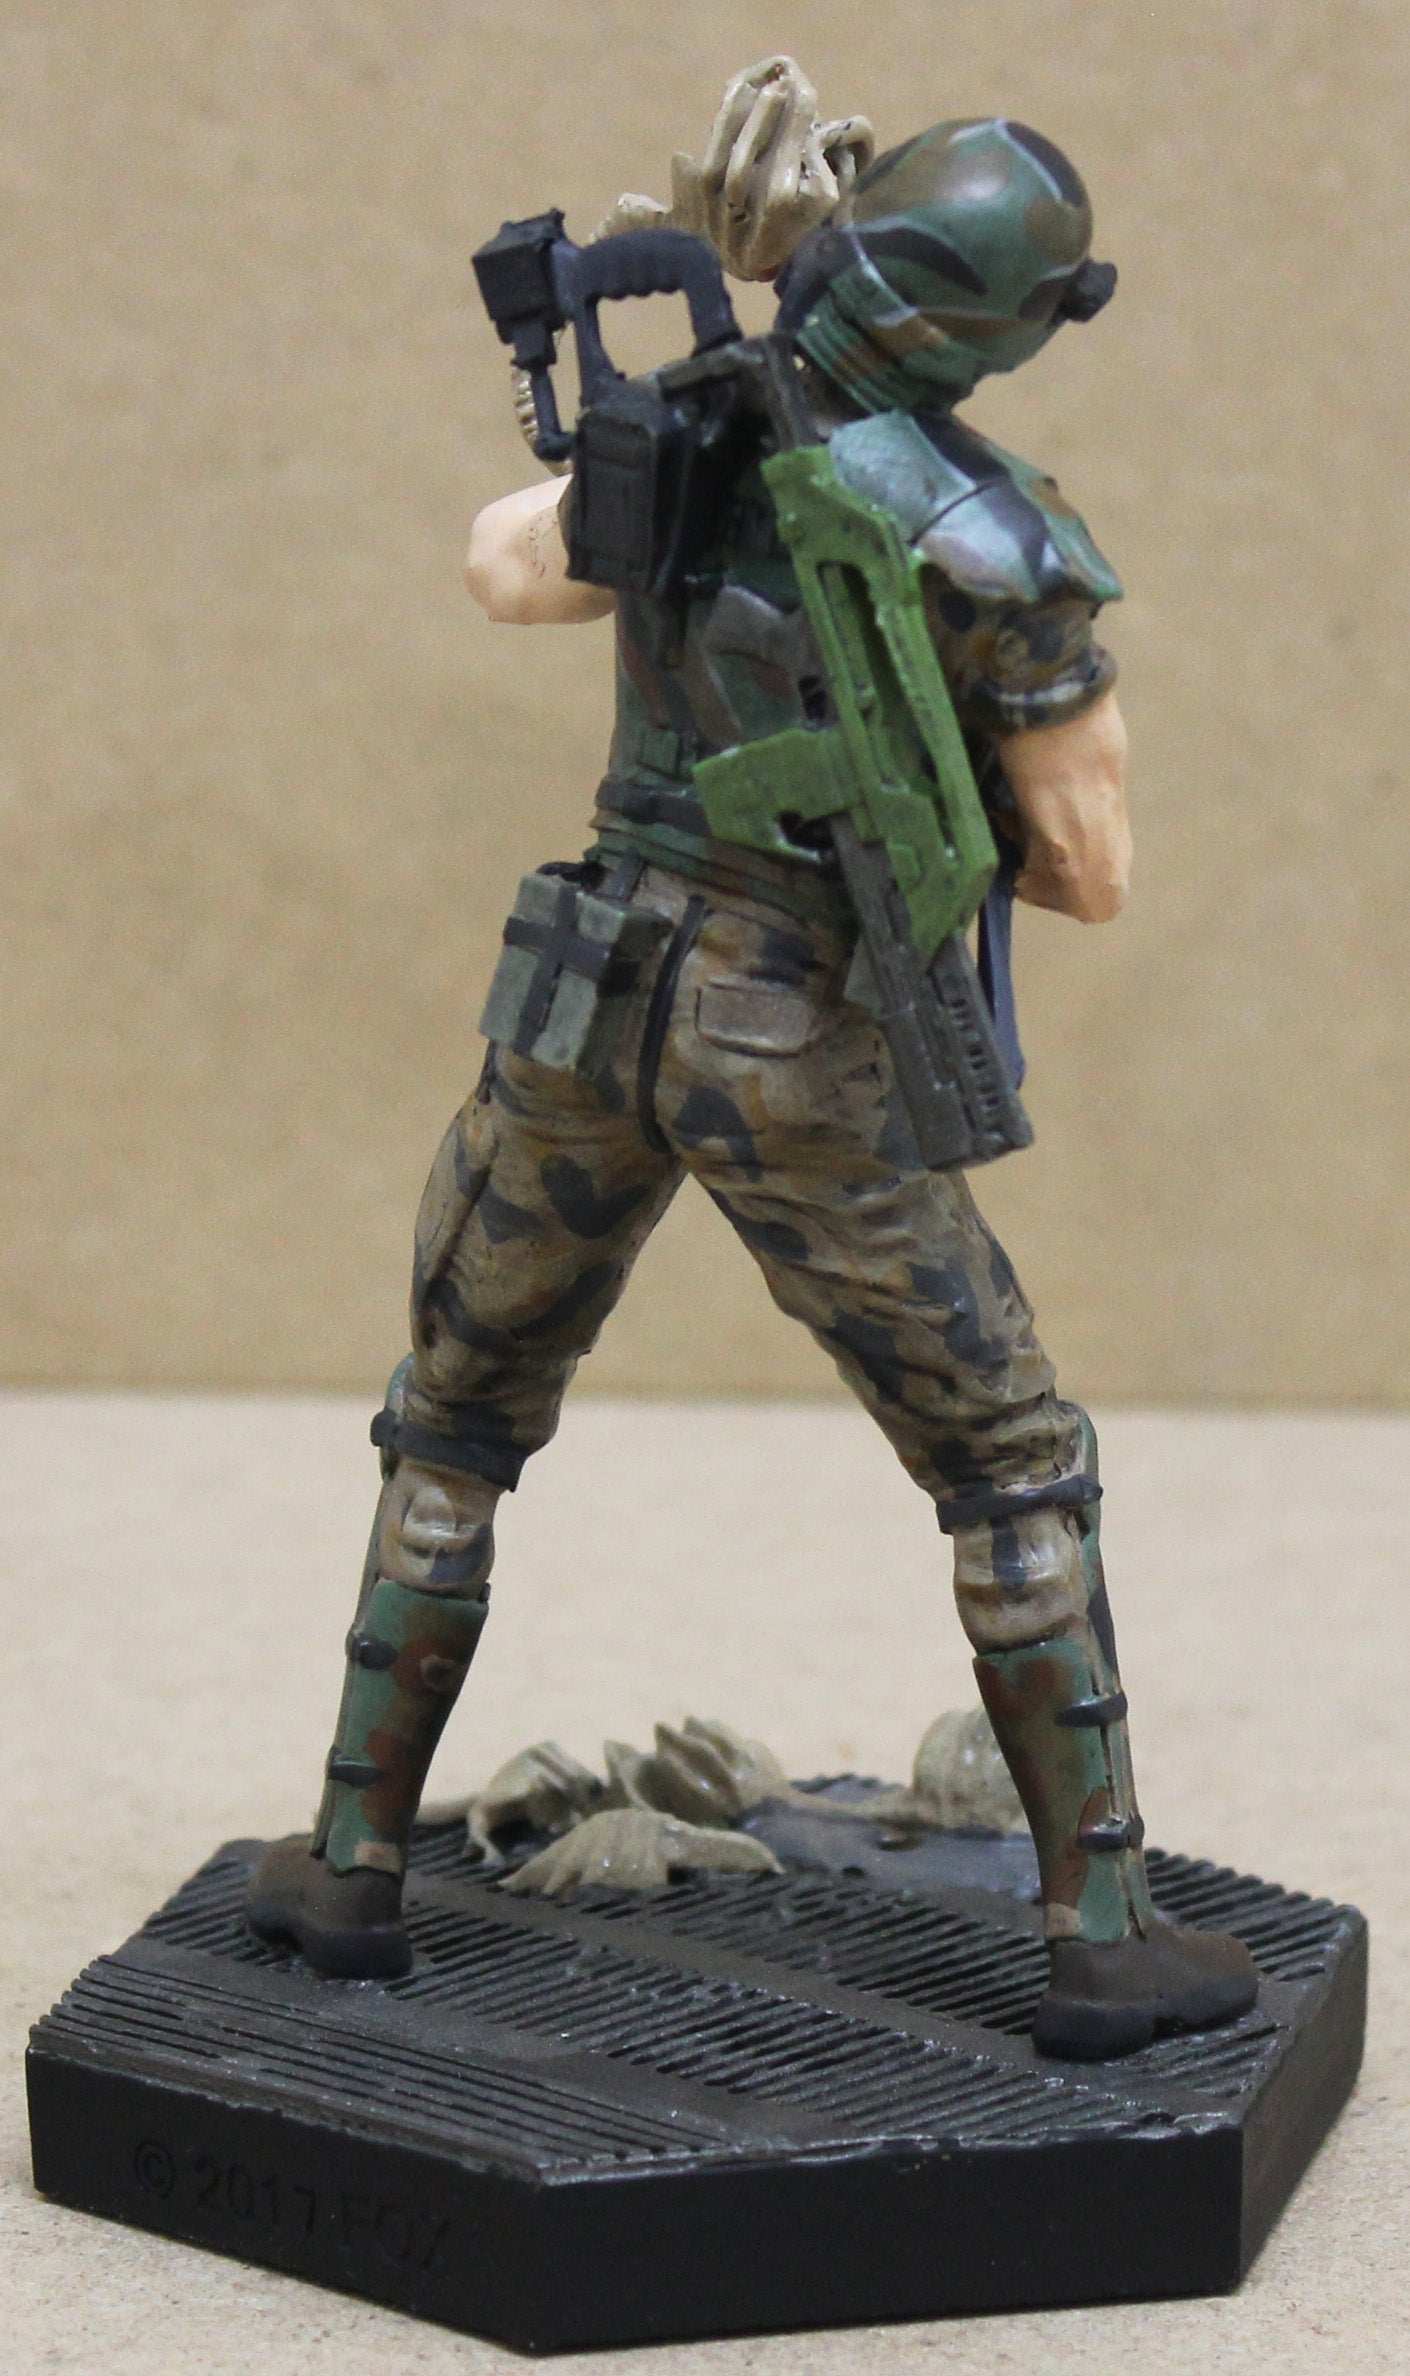 Alien & Predator Figurine Collection Corporal Hicks